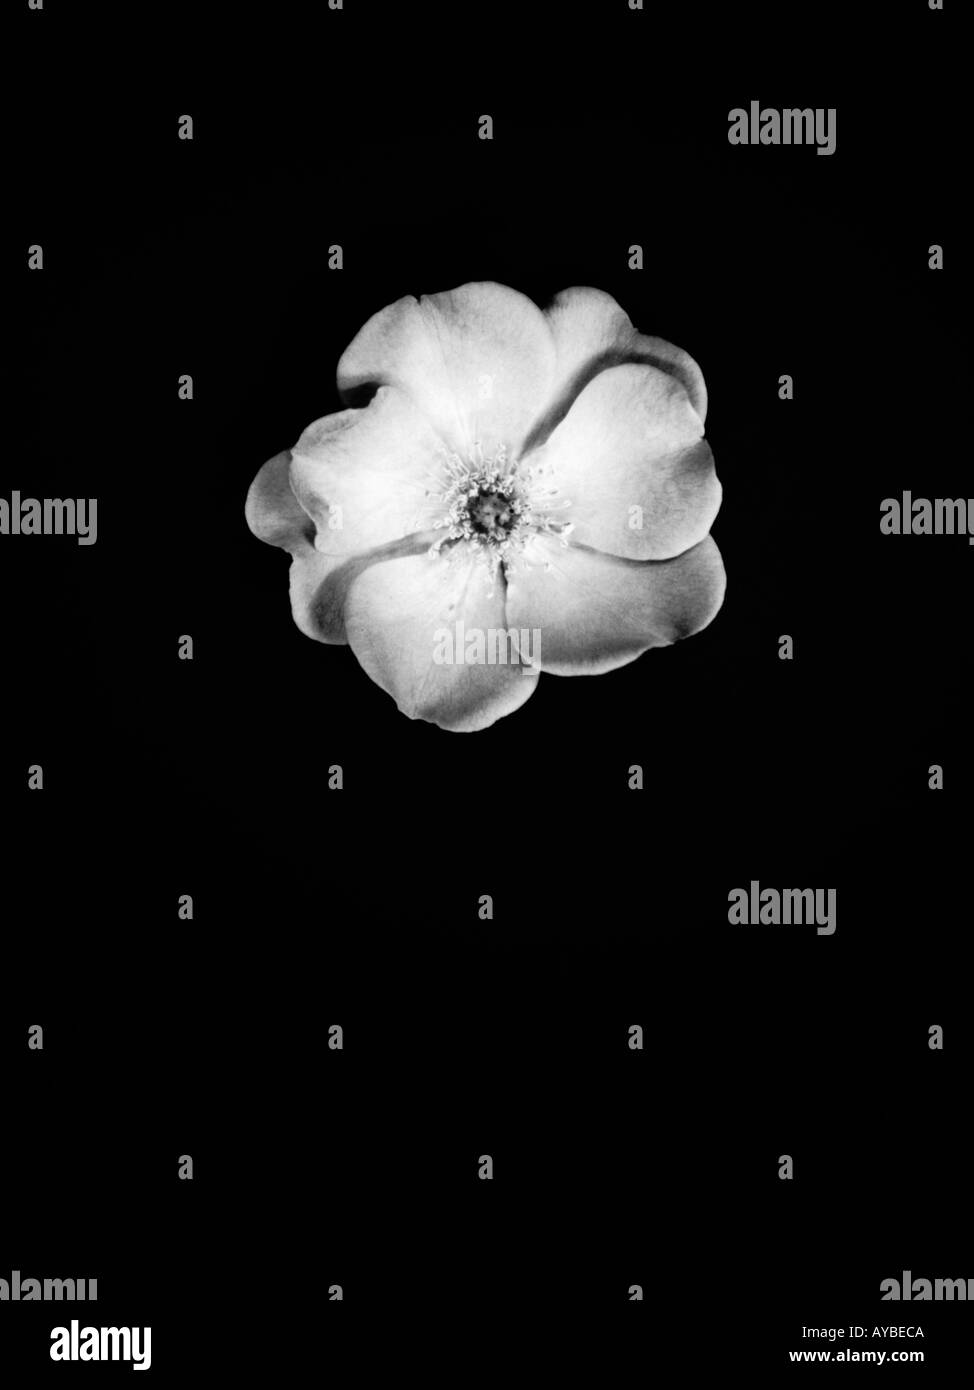 black and white shot Phlox North American plant of the genus faimly Stock Photo